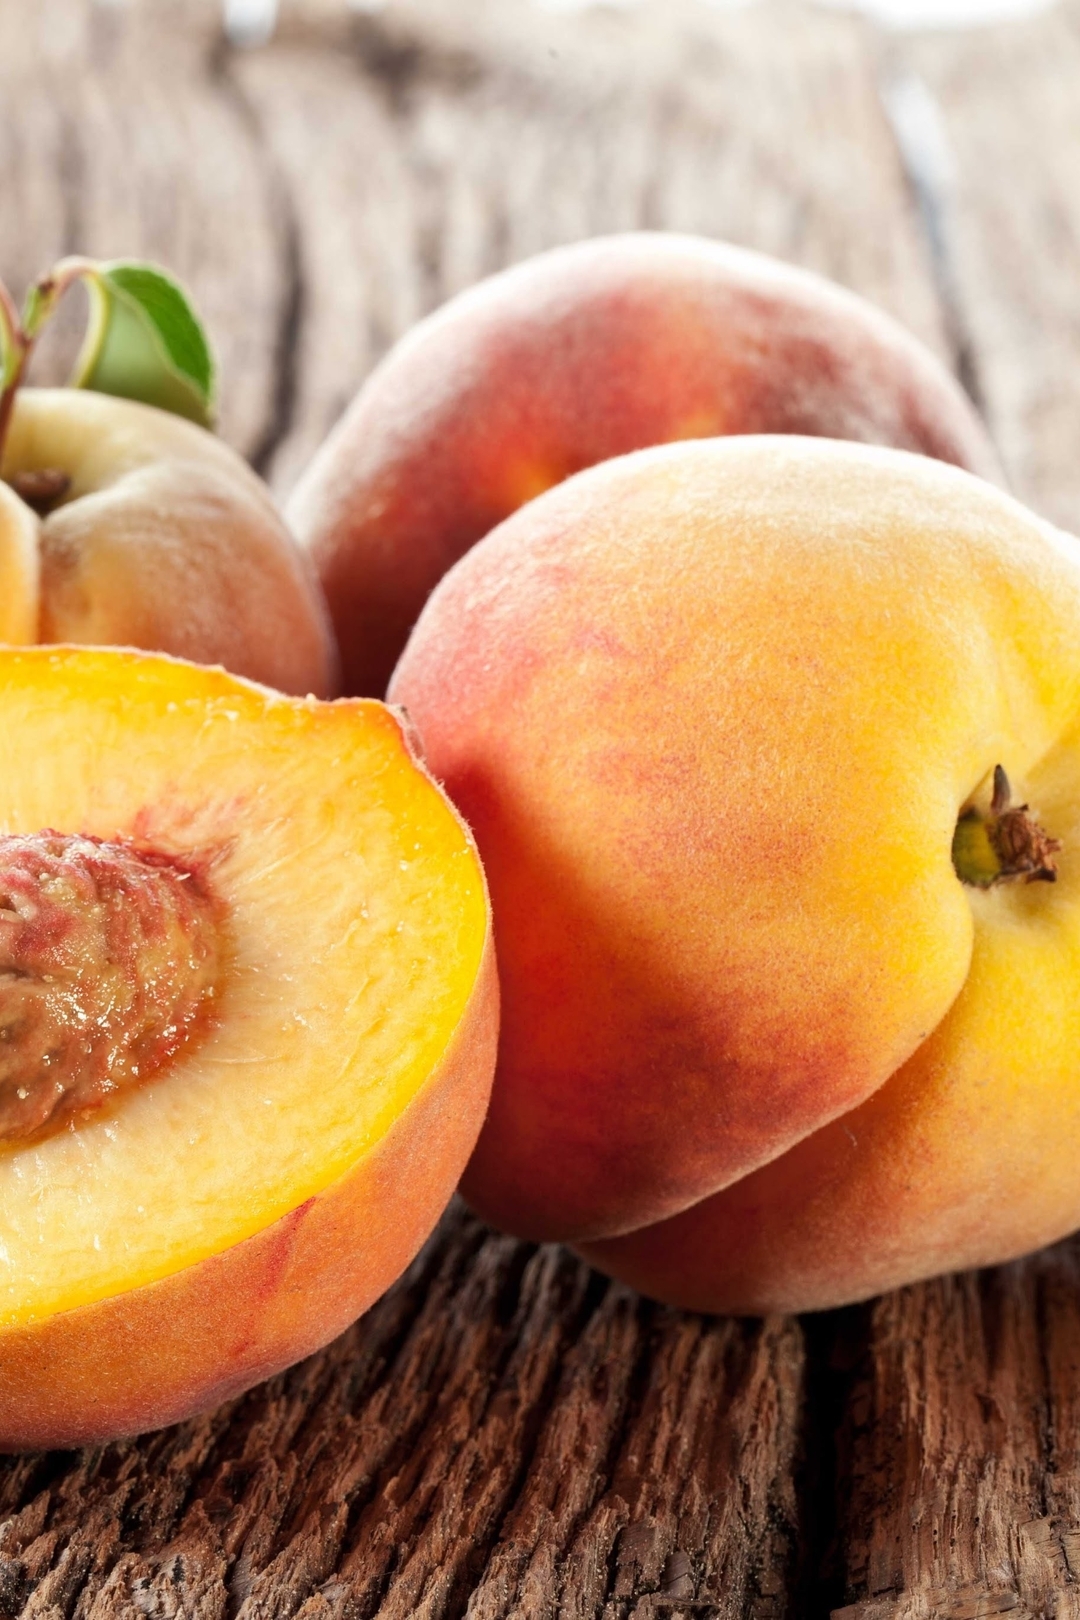 Image: Peaches, vitamins, fruits, harvest